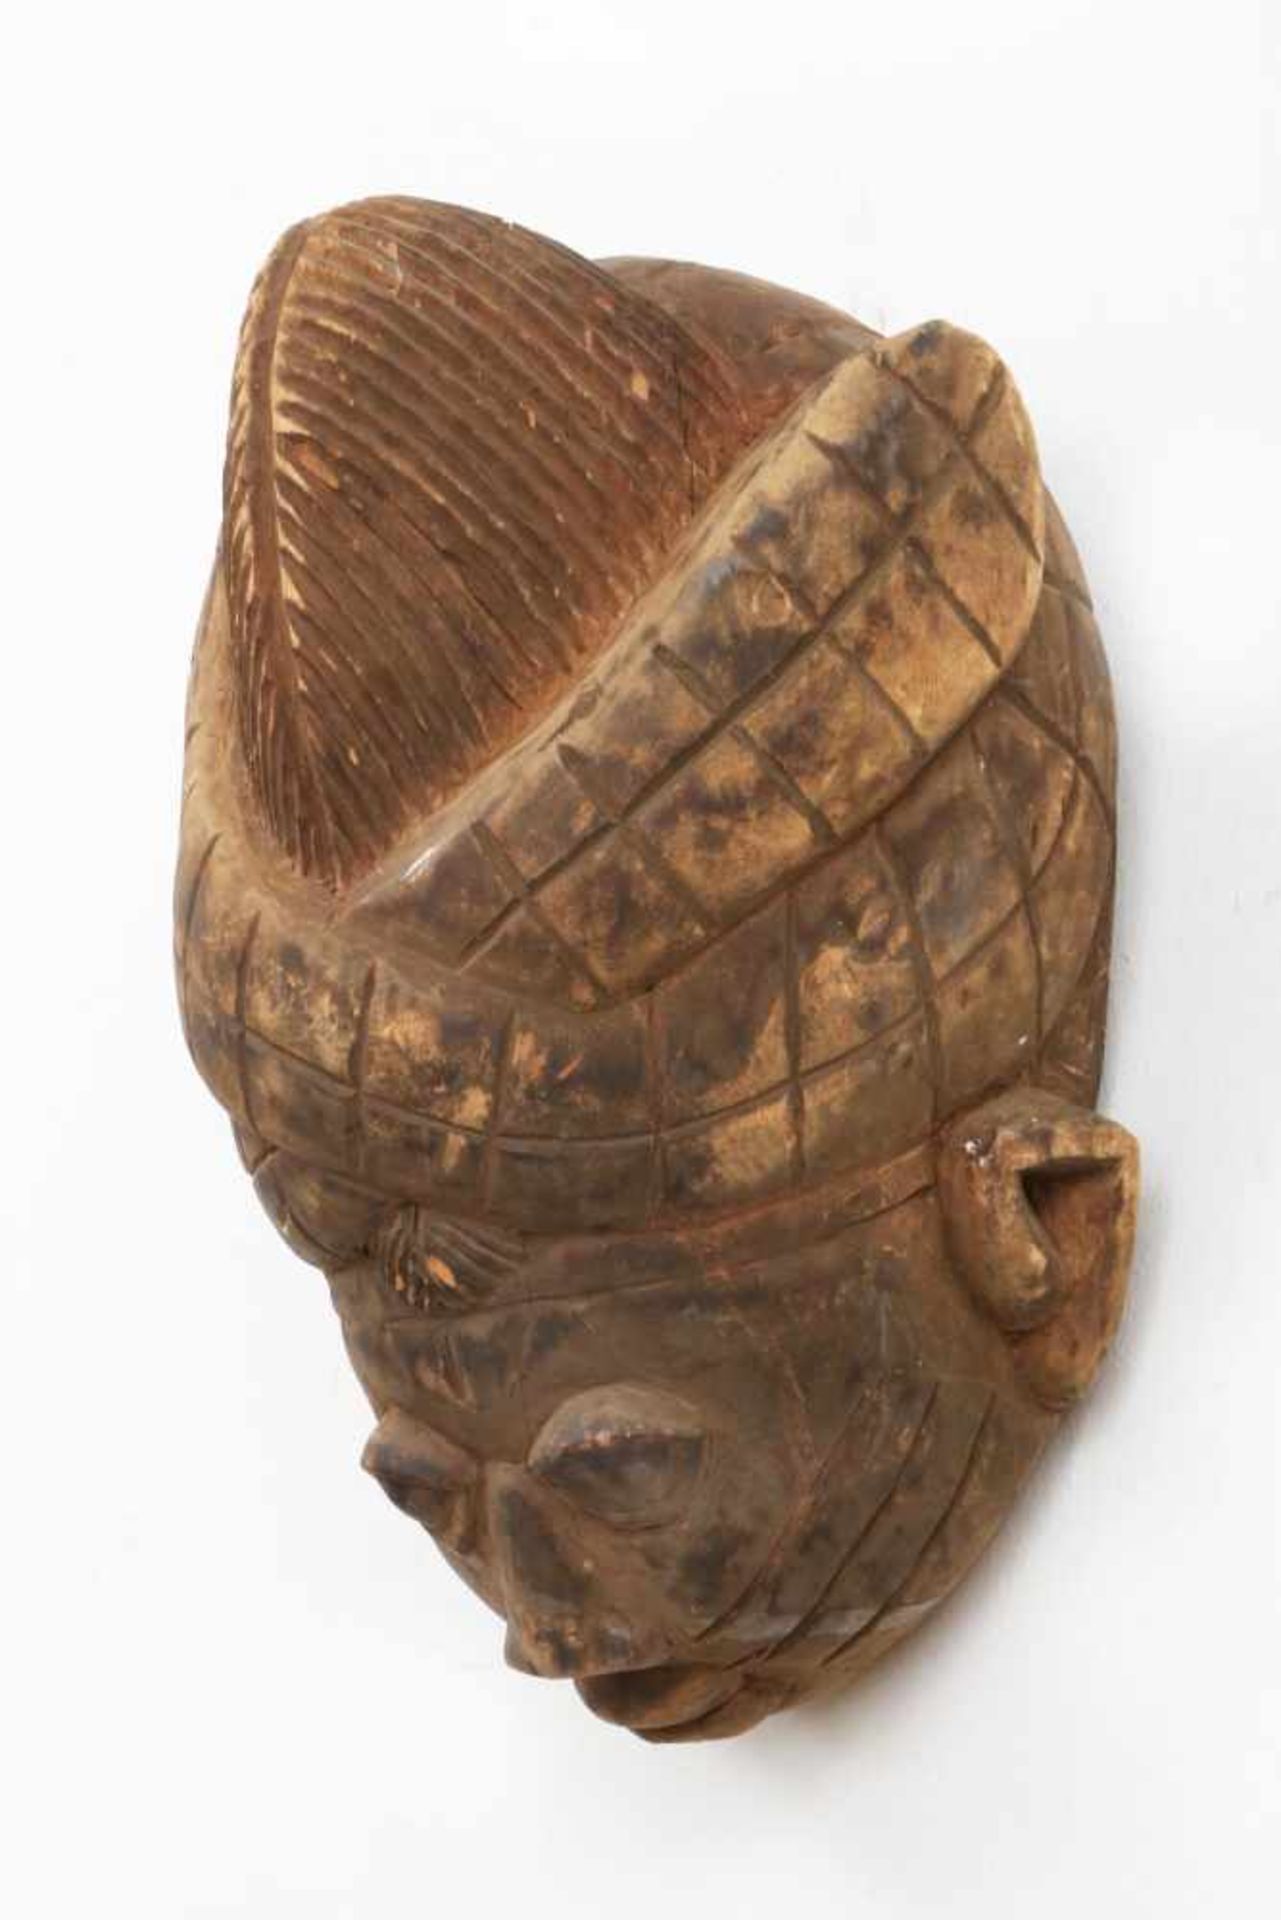 Afrikanische Ritualmaskewohl Zentralafrika, haubenförmiger Kopfschmuck mit Kerbdekor, H ca. 40cm - Bild 2 aus 2